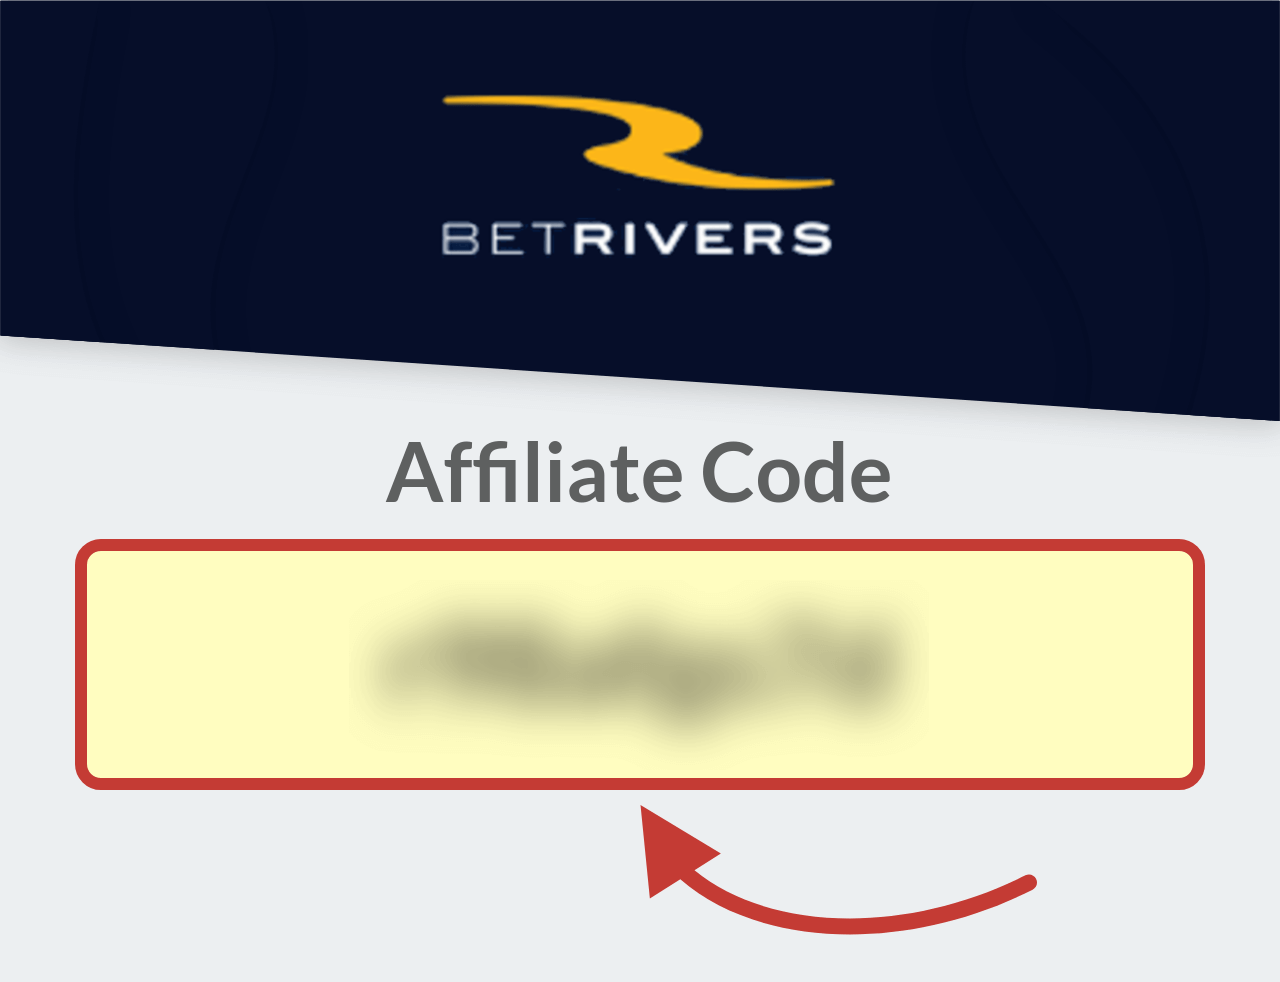 BetRivers Affiliate Code